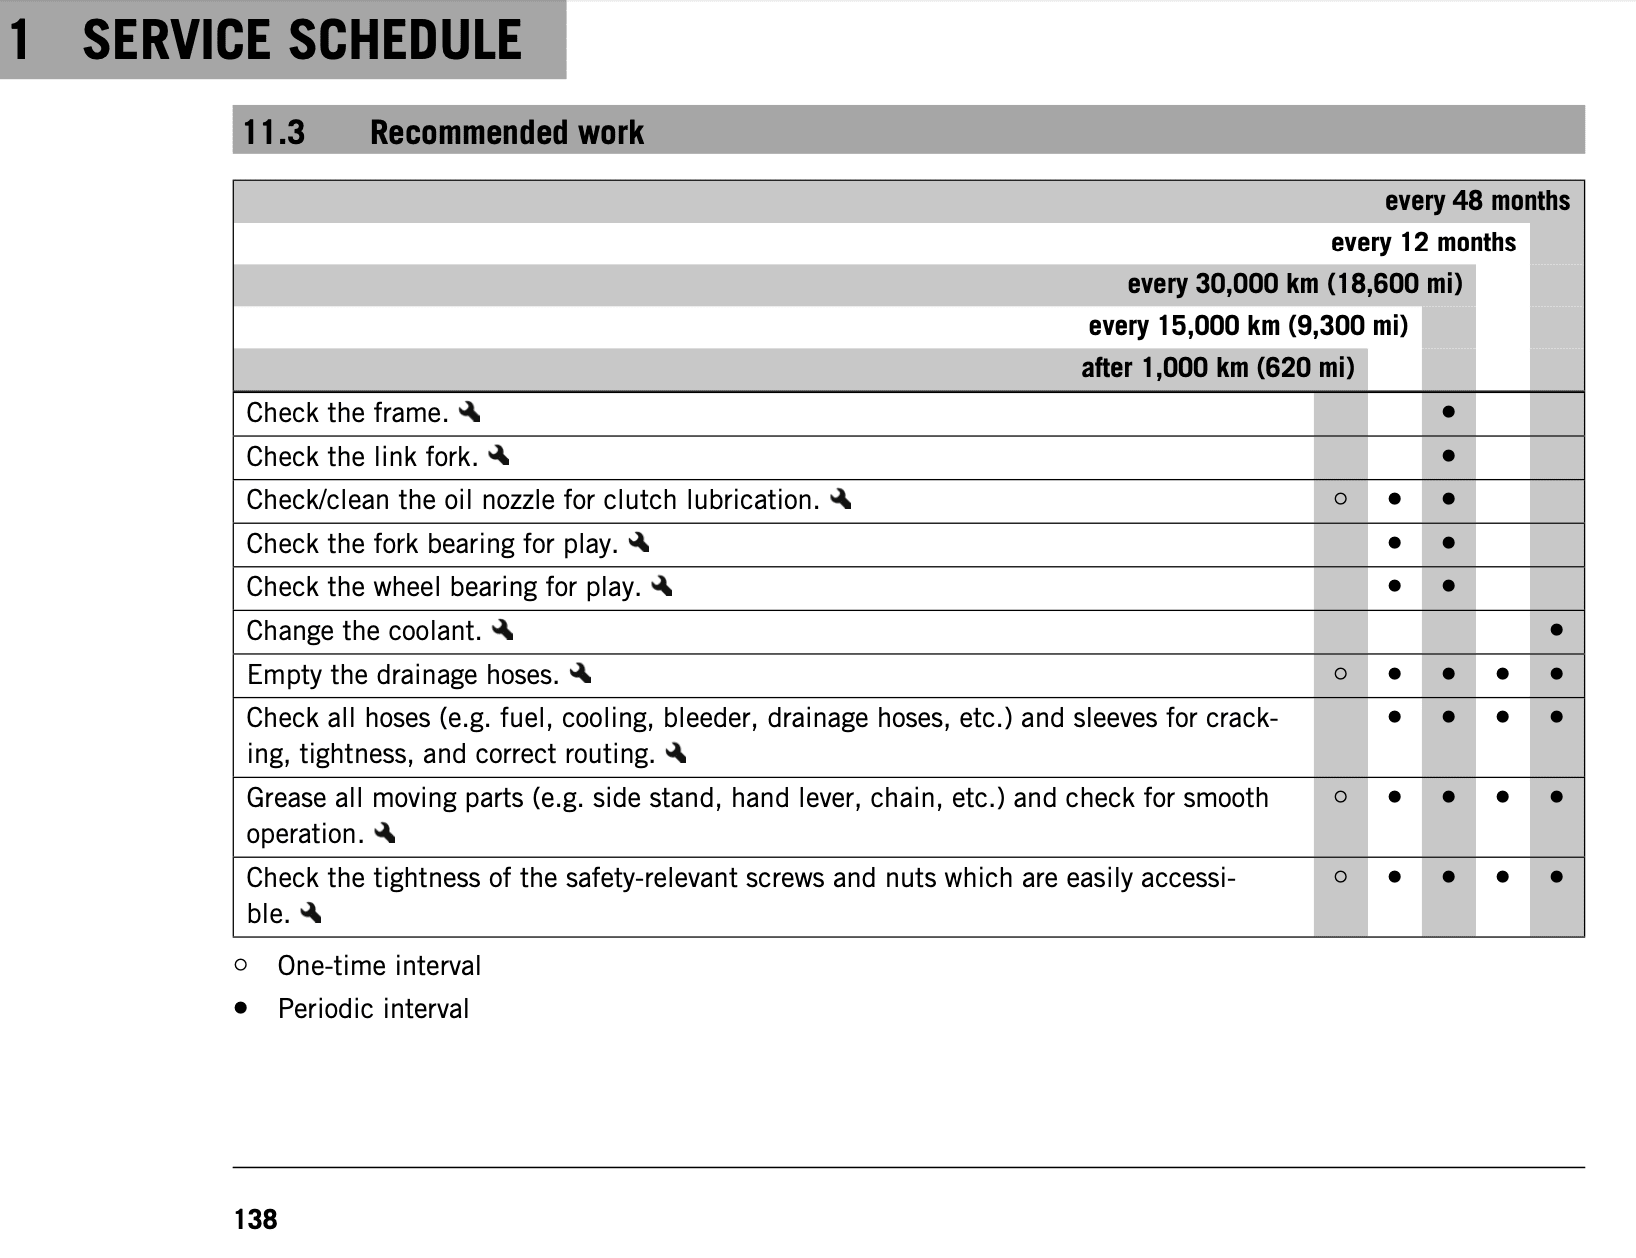 2018-2020 KTM 790 Duke maintenance schedule from manual 3